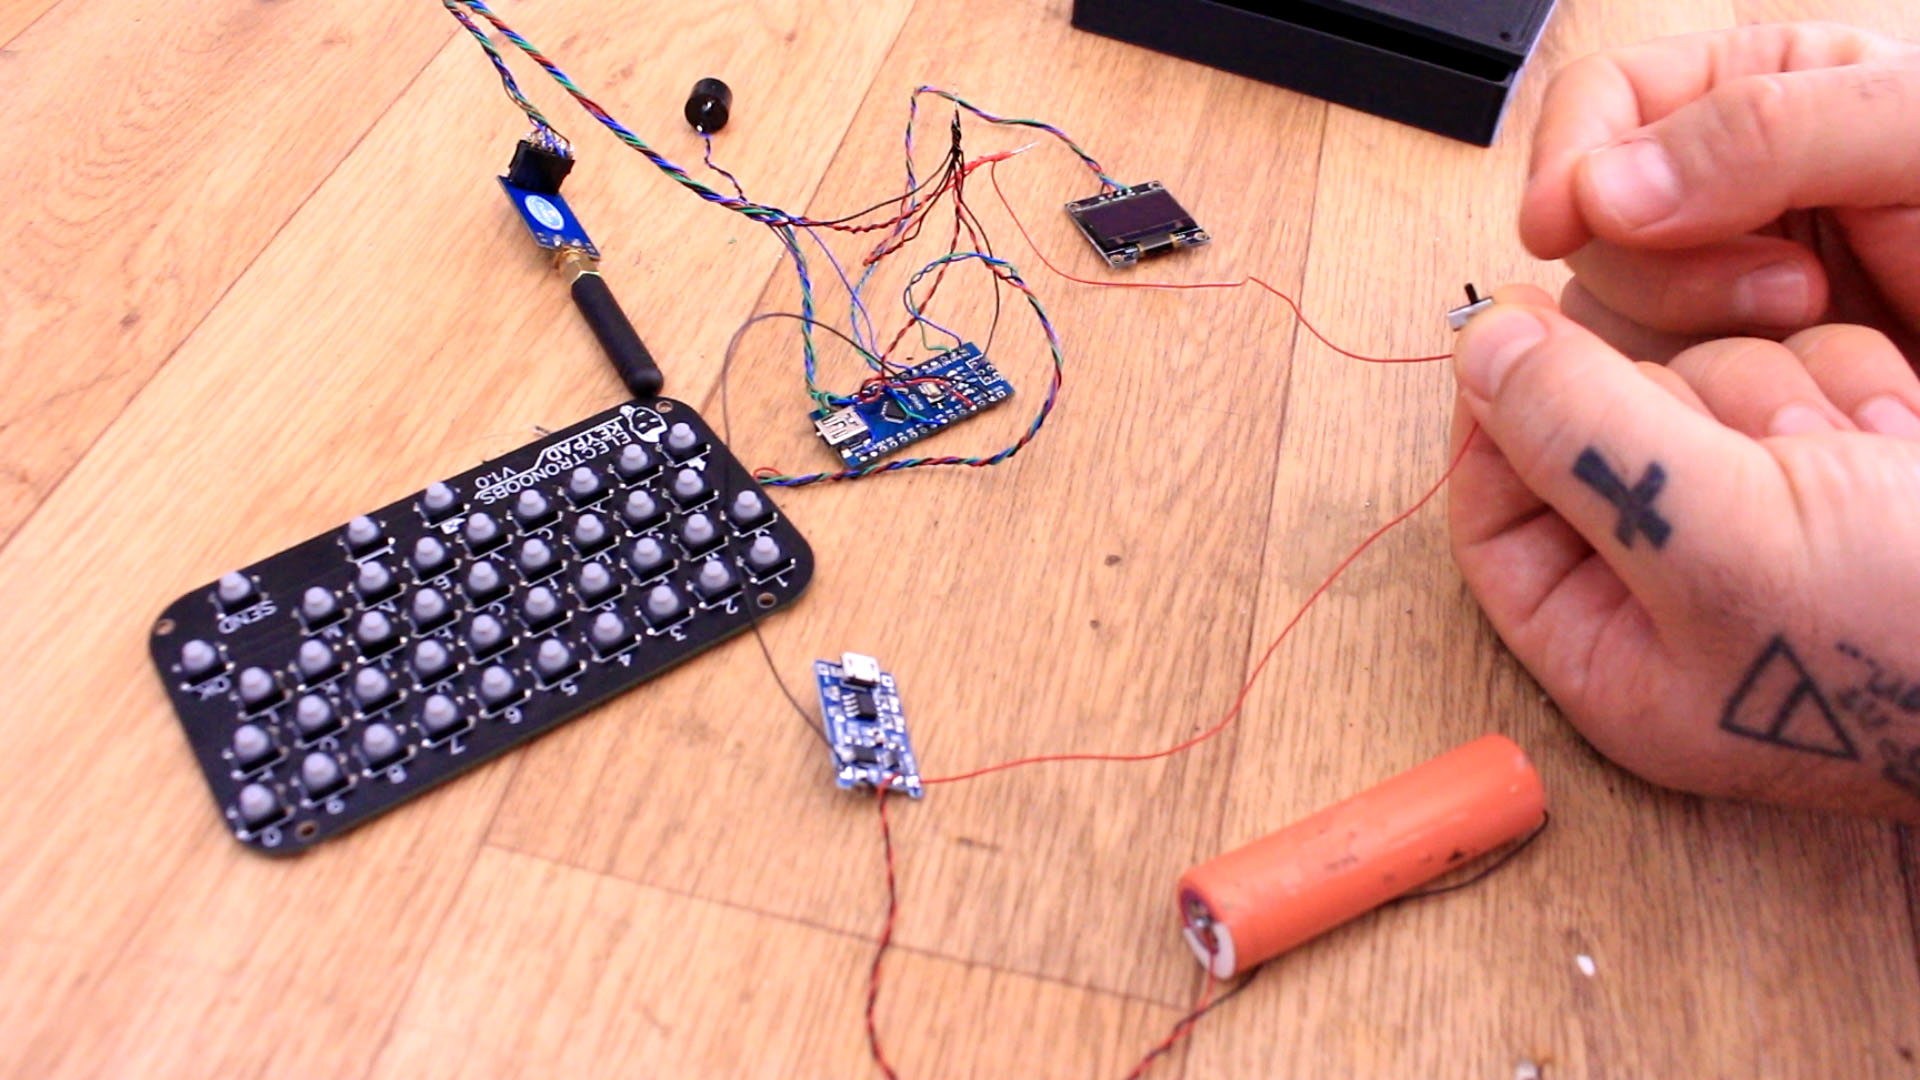 homemade arduino radio chat send text walkie talkie